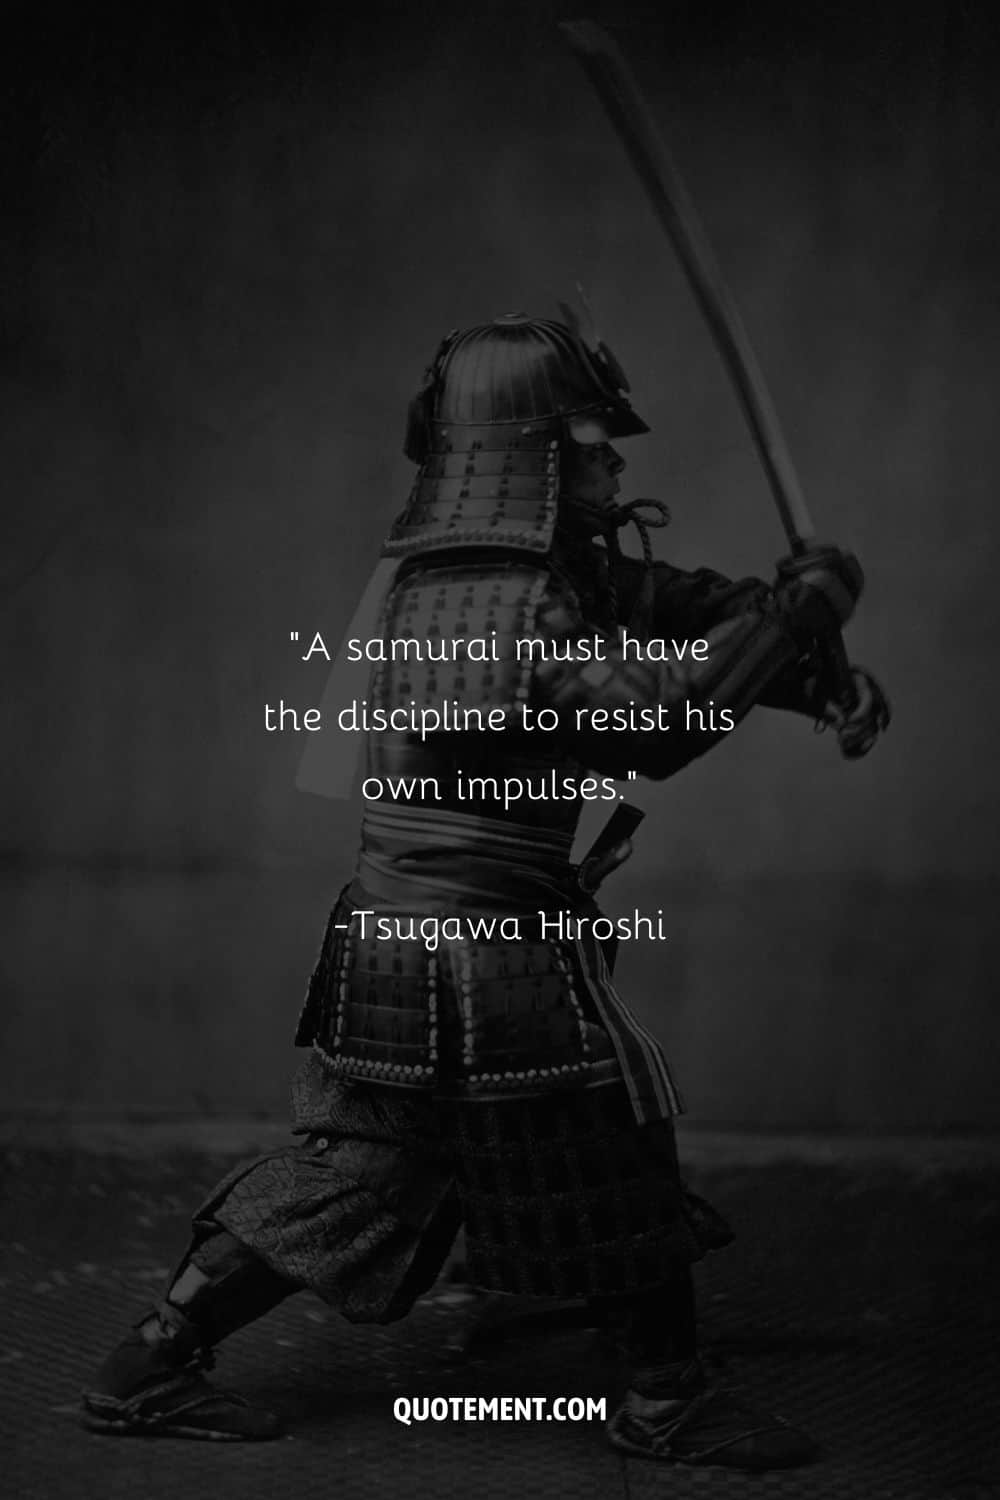 Fierce samurai wielding his sword representing samurai warrior quote